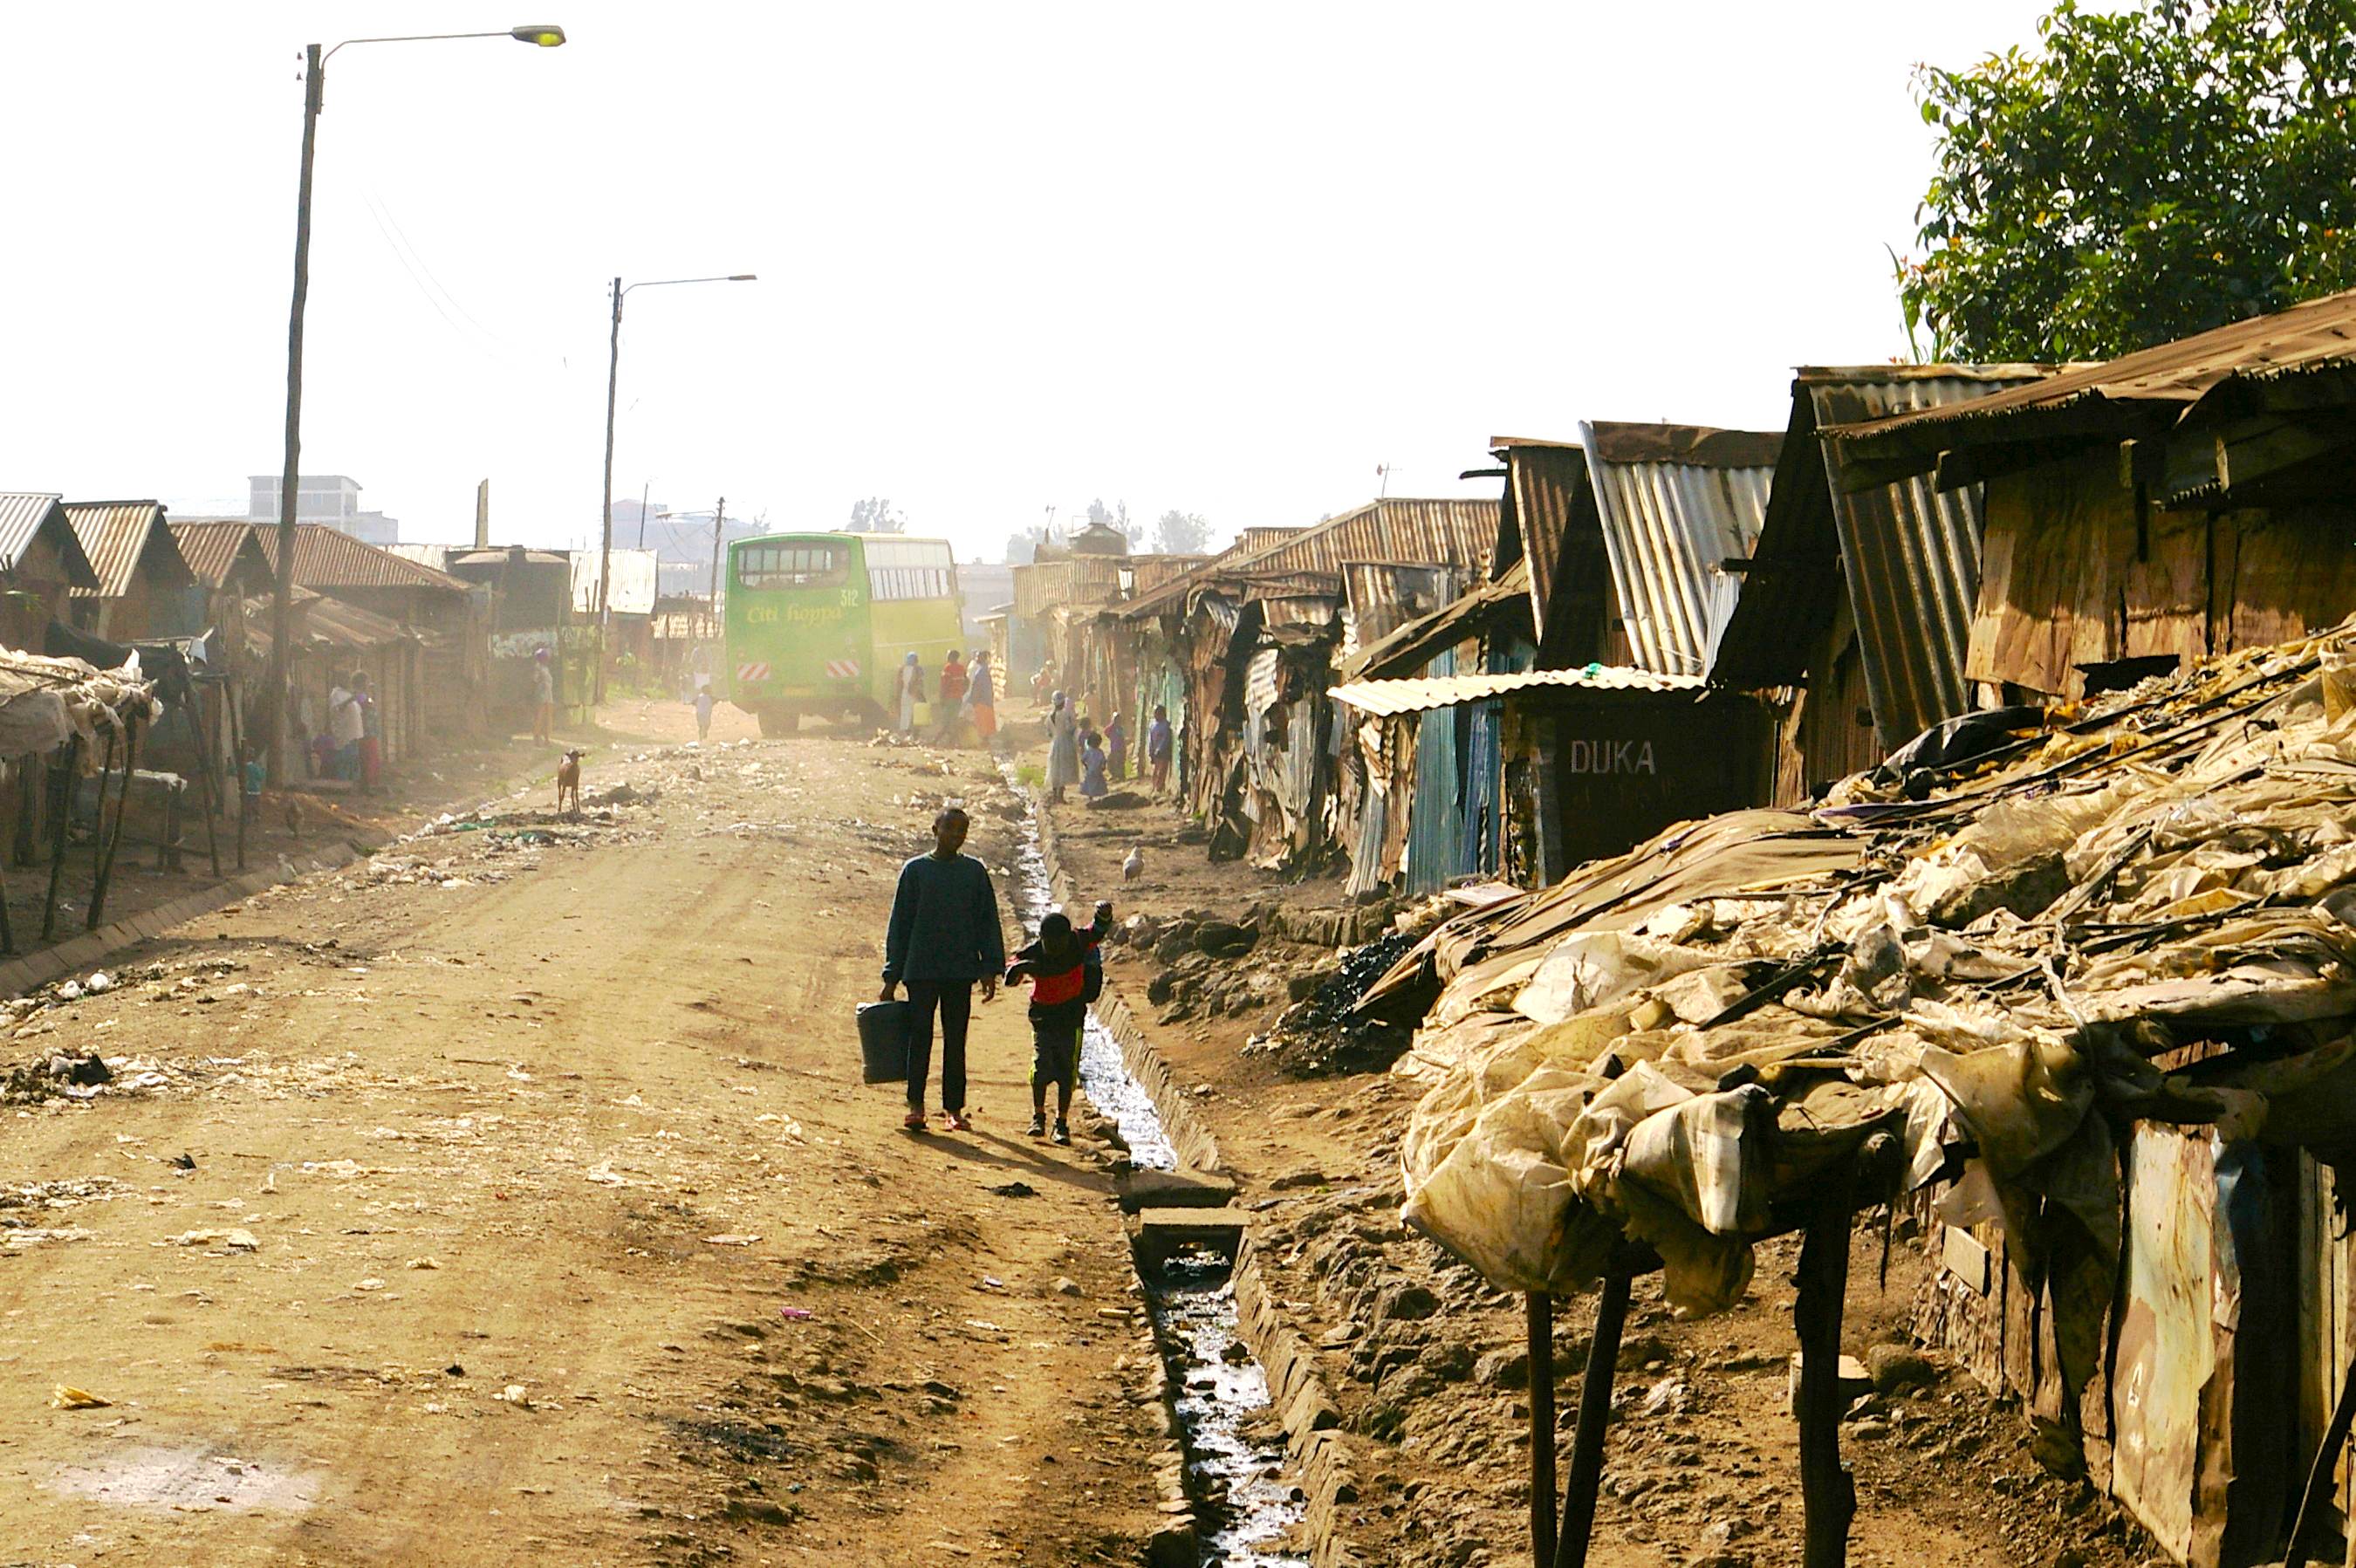 Korogocho is one of Nairobi's biggest slums. ©Carlos Fernandez/www.flickr.com